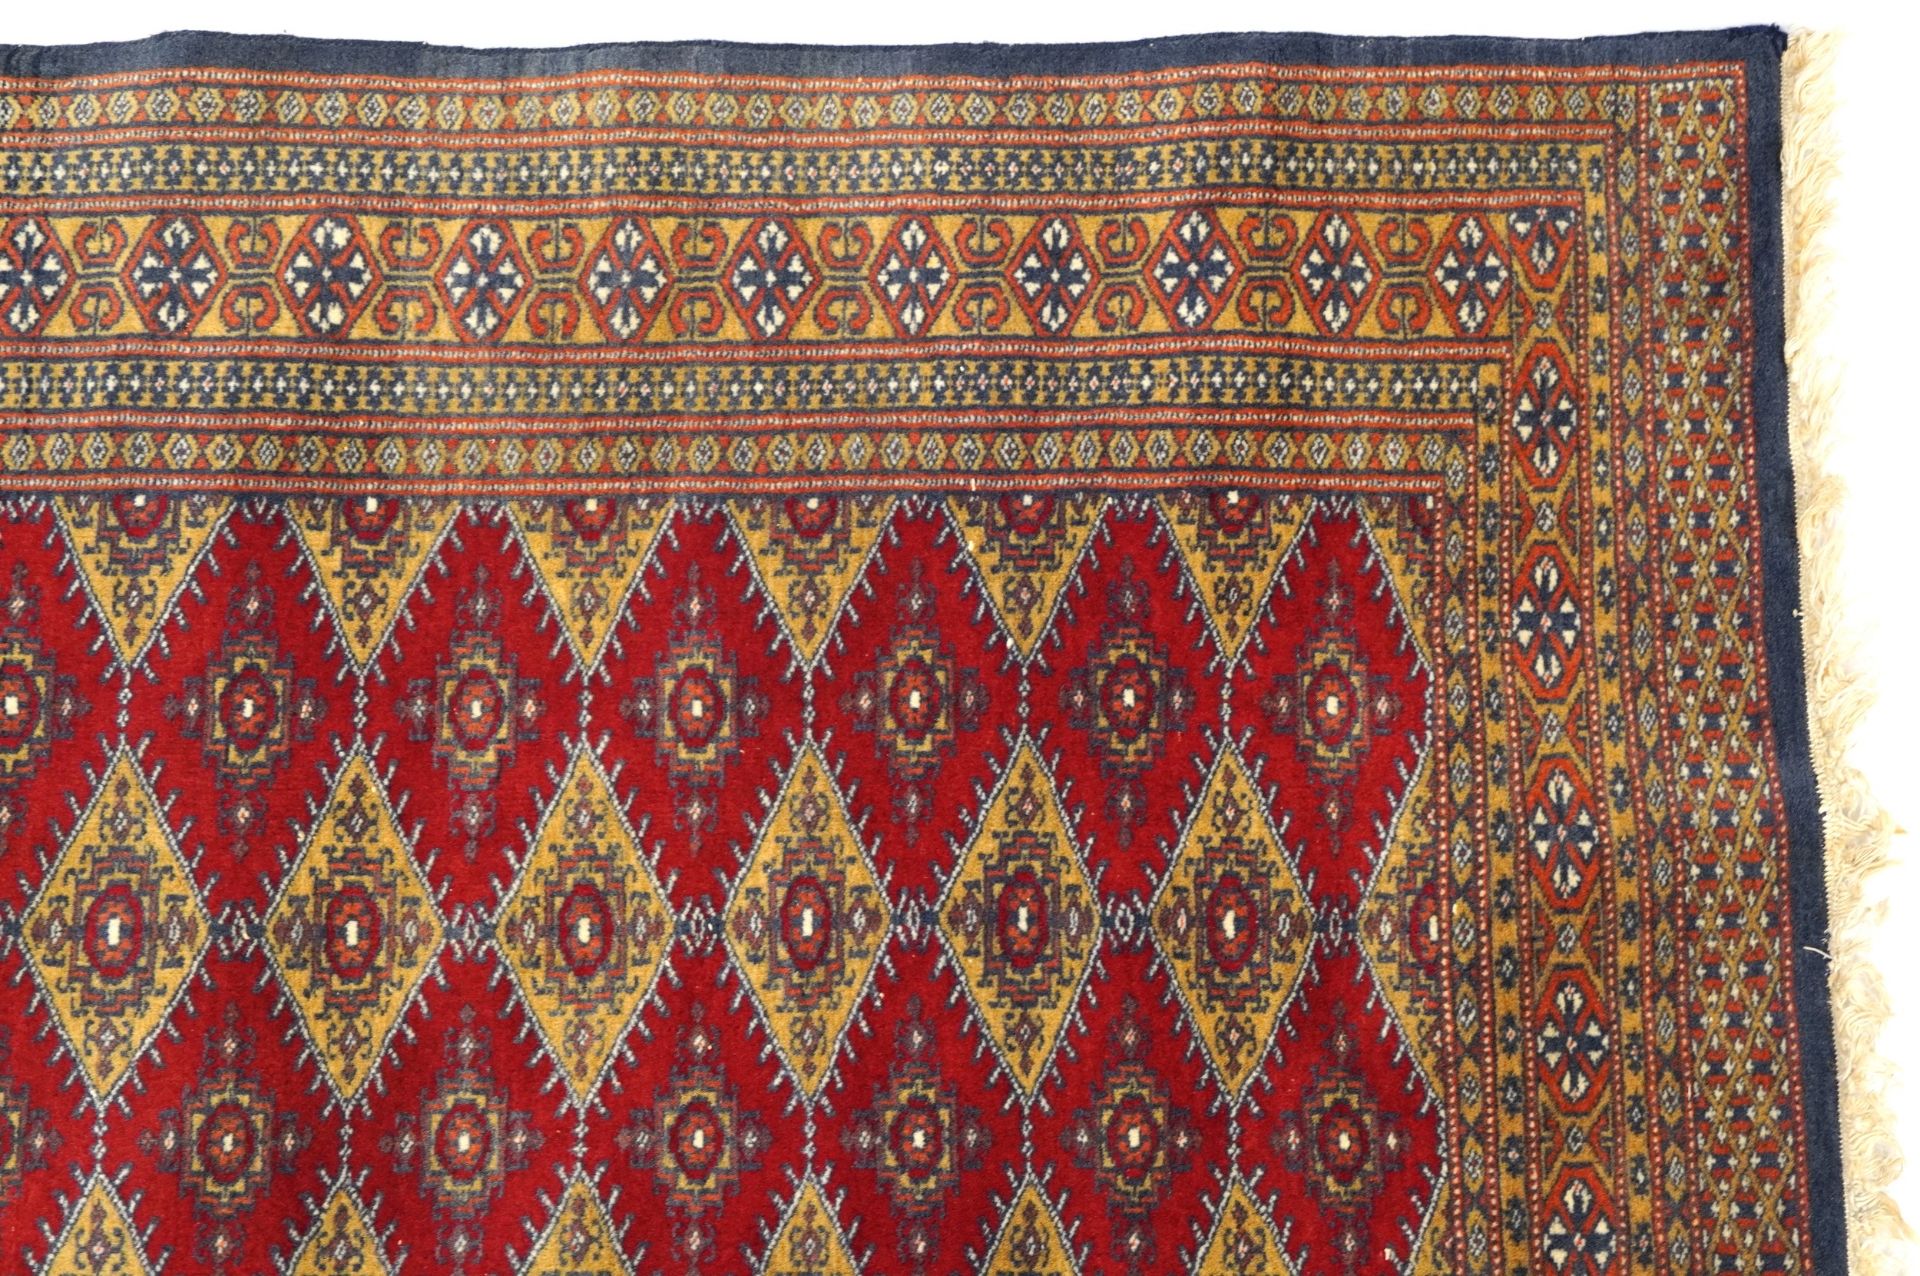 Rectangular red and blue ground rug with all over geometric design, 145cm x 91cm - Bild 3 aus 6